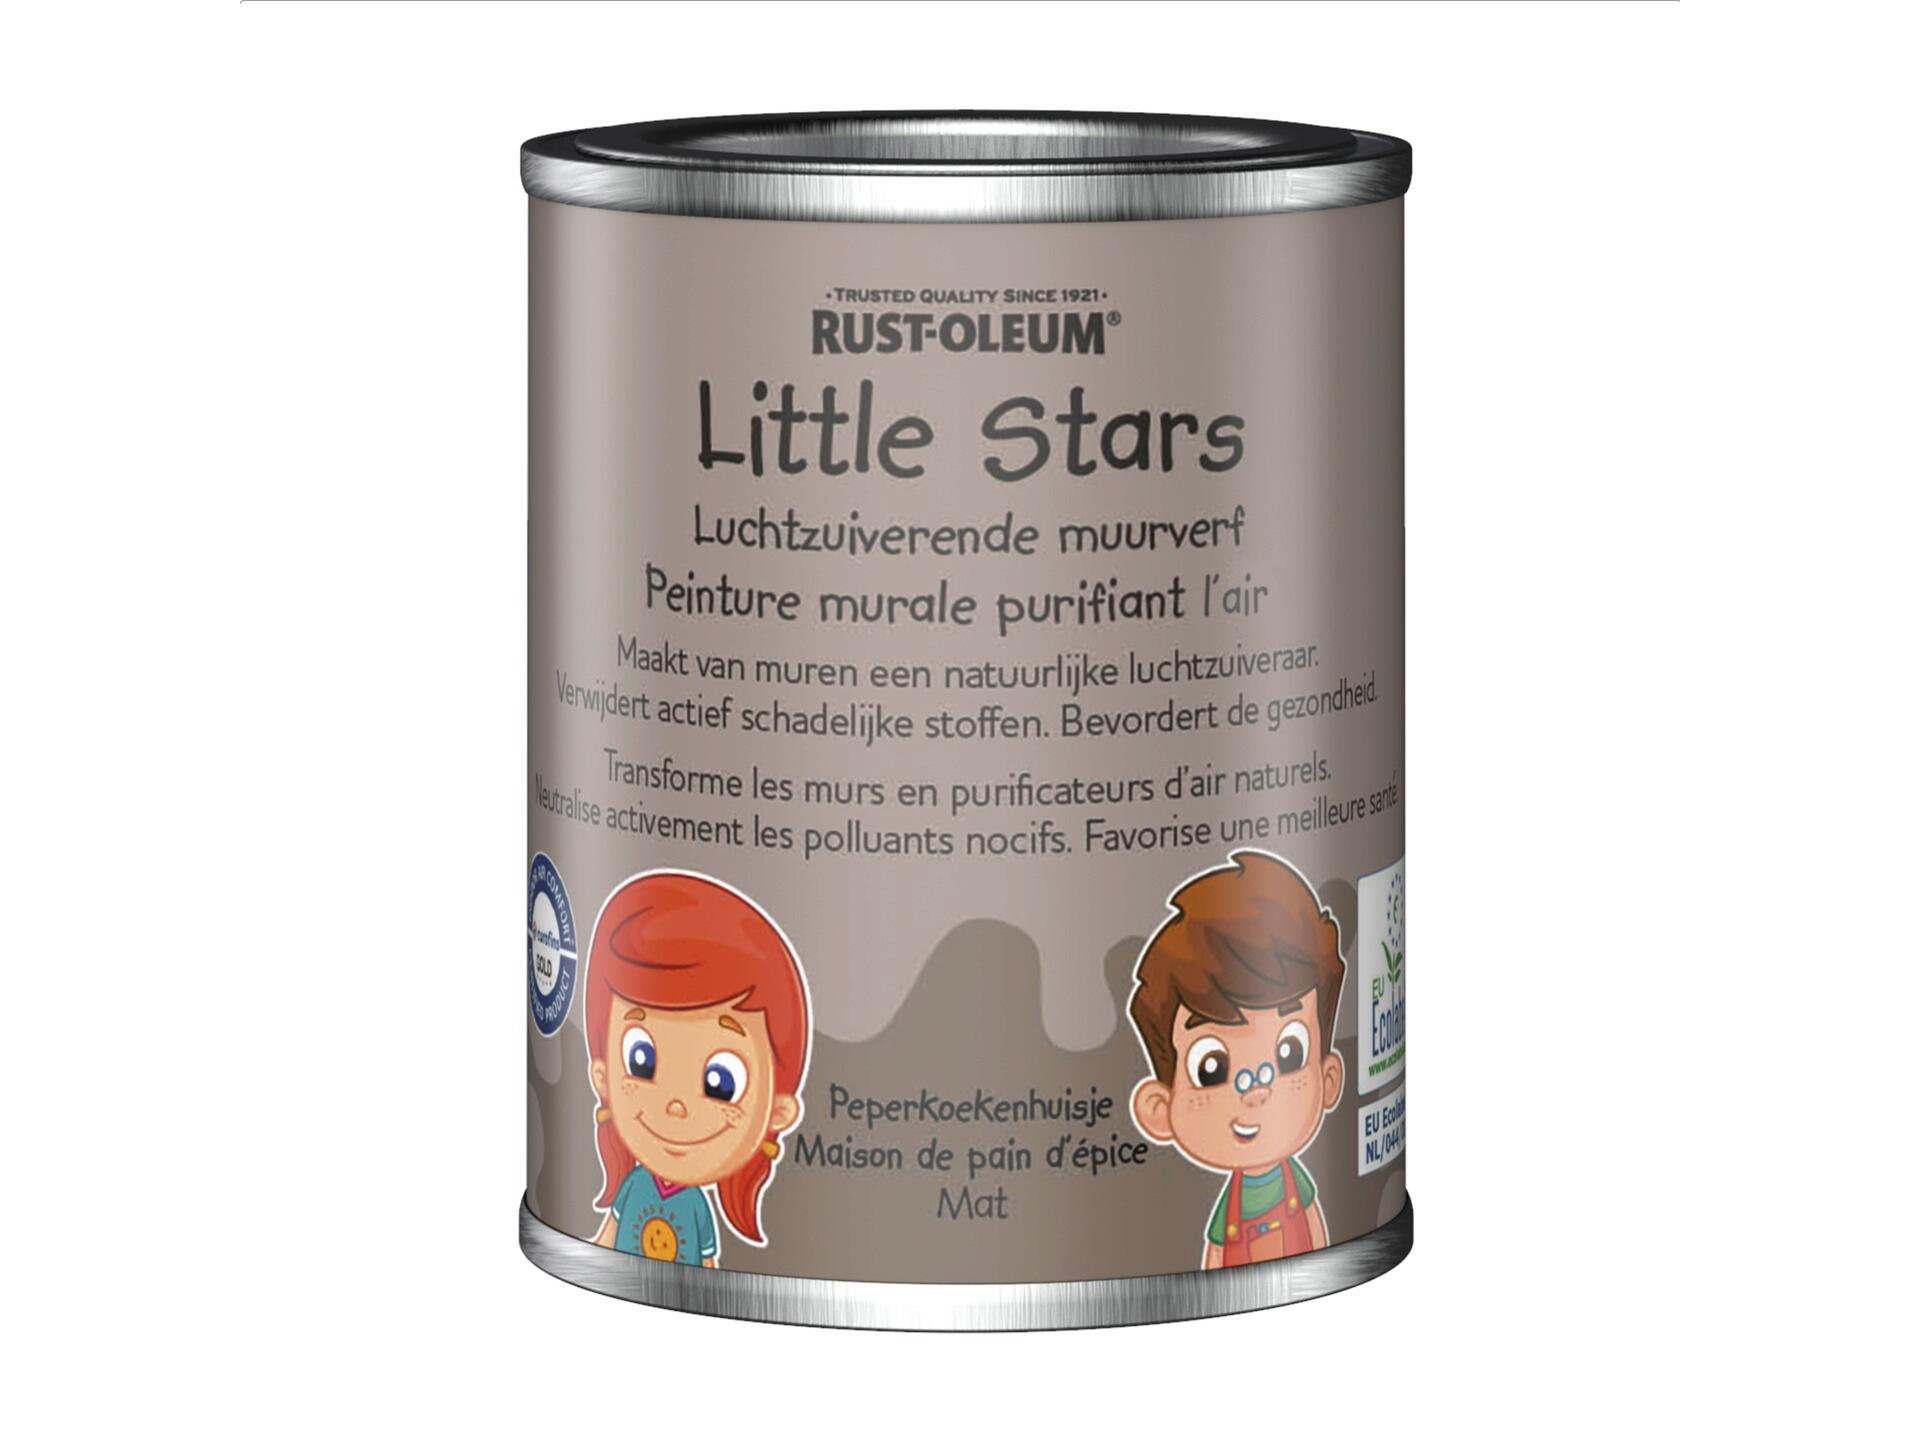 Rust-oleum Little Stars luchtzuiverende muurverf 125ml peperkoekenhuisje